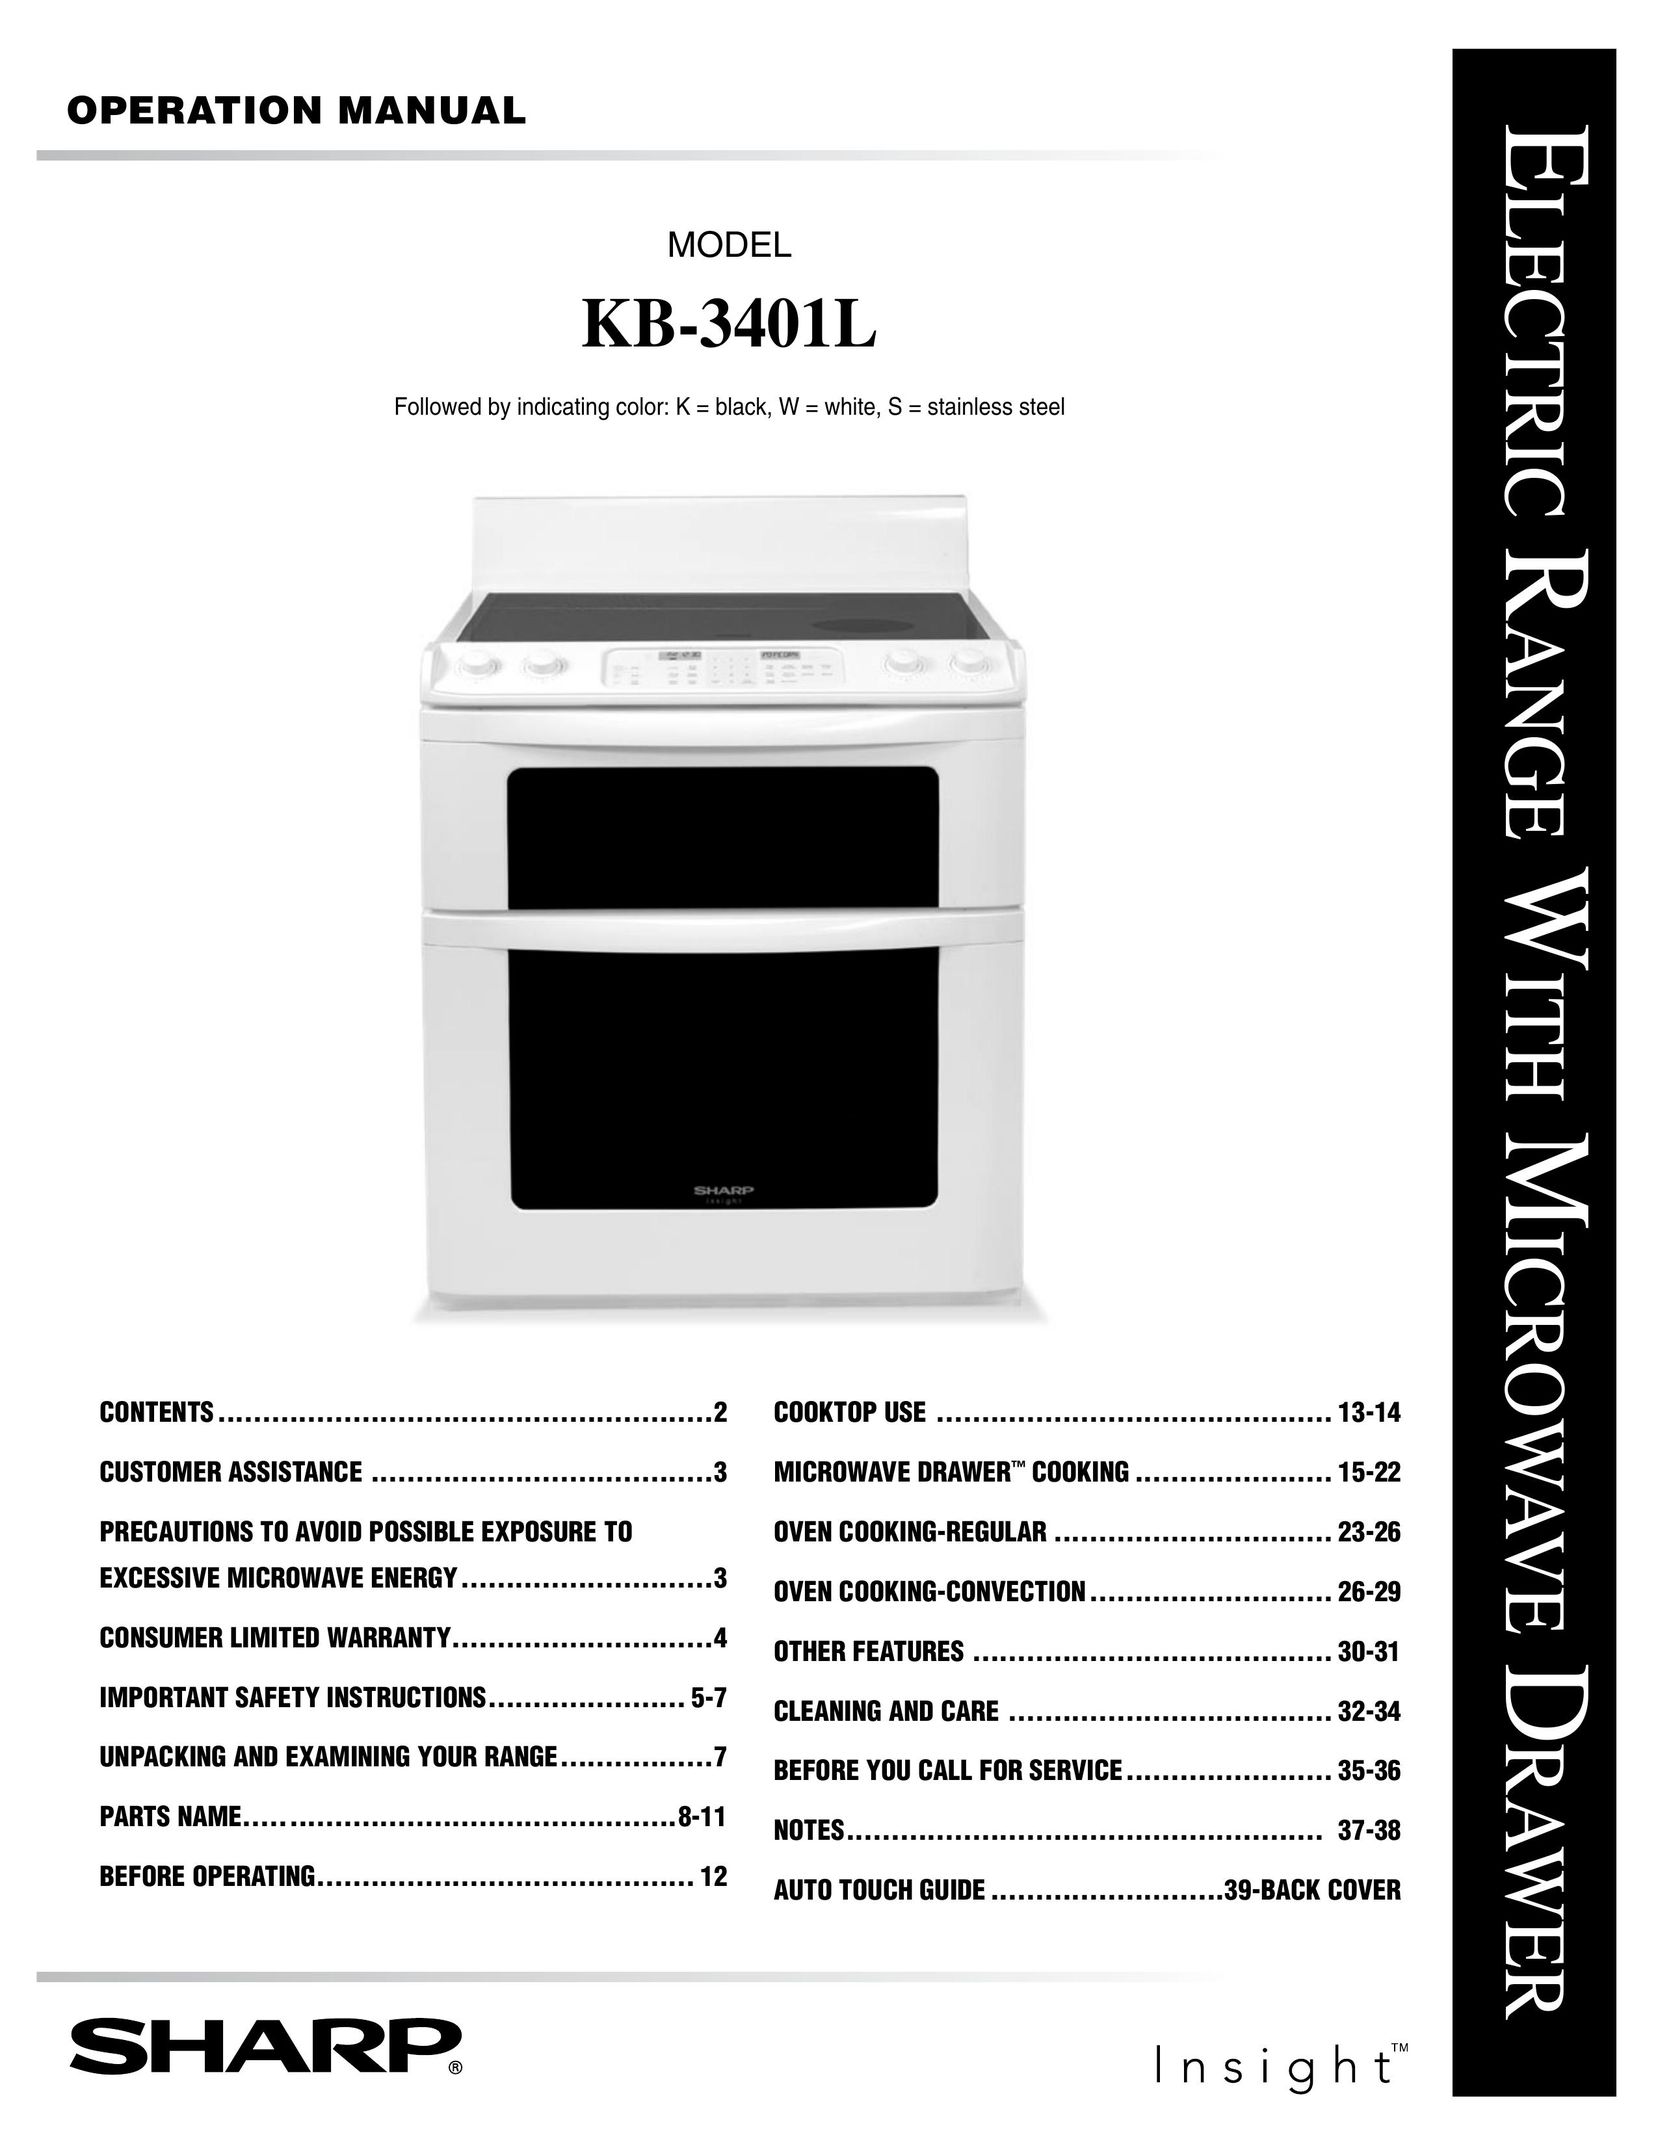 Sharp KB-3401L Range User Manual